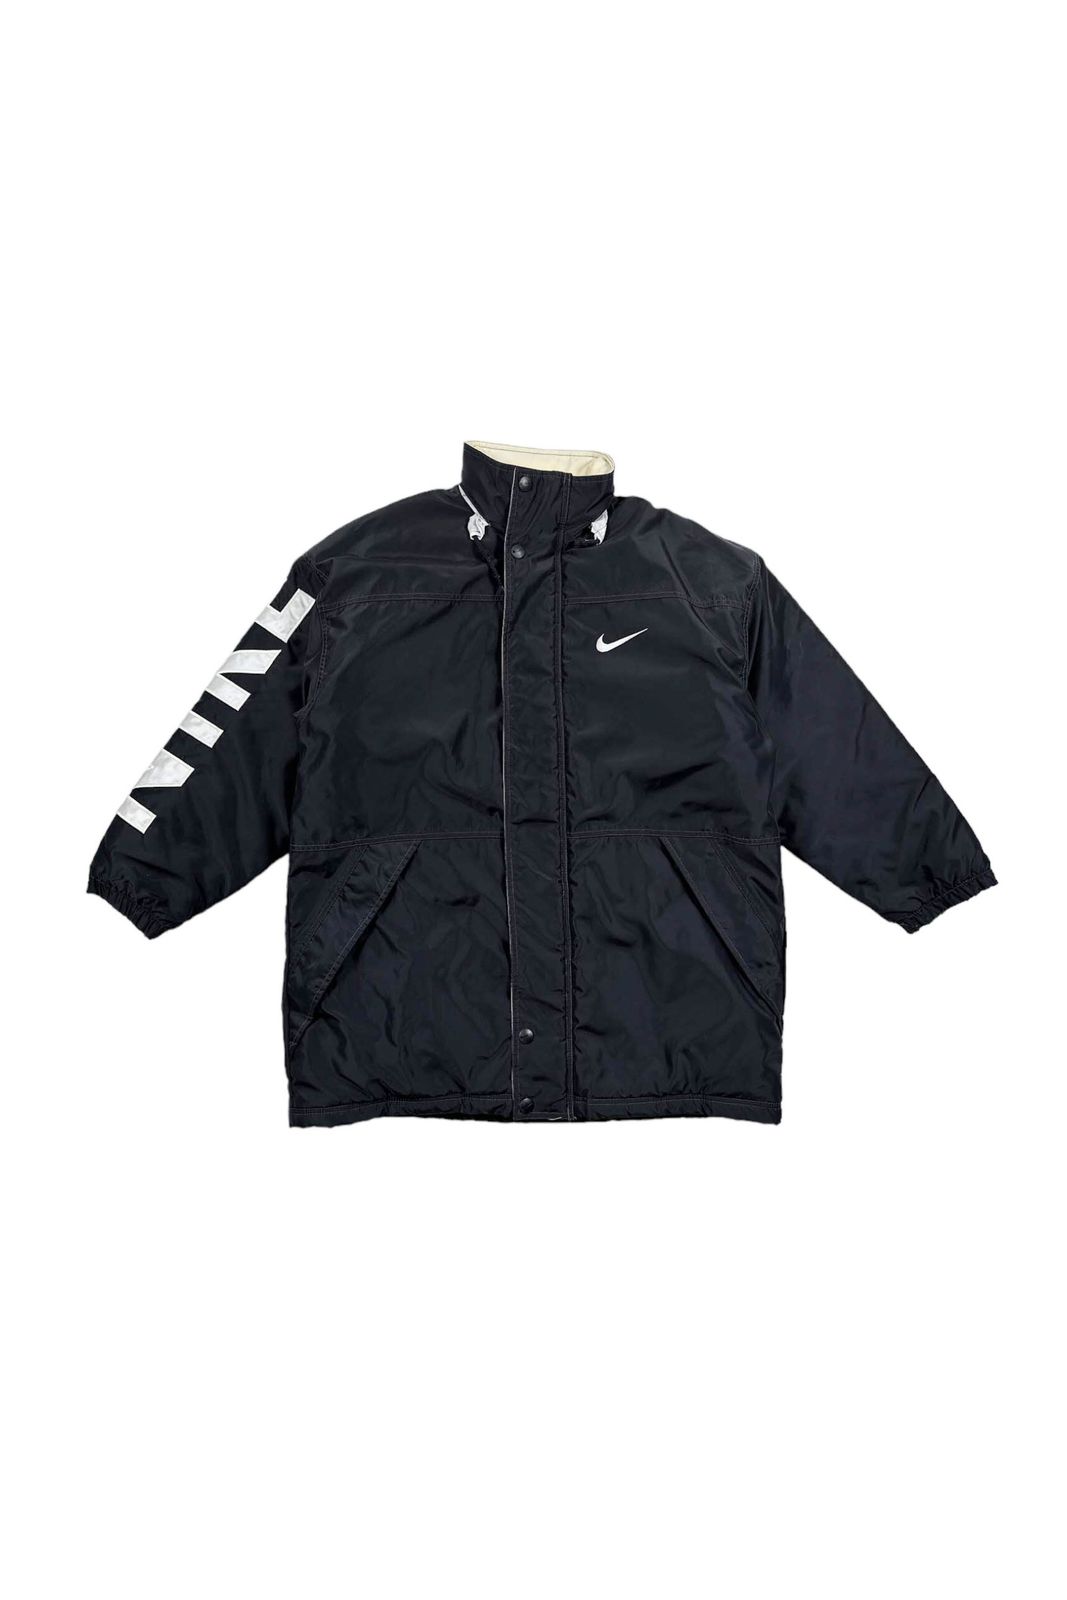 90's NIKE nylon jacket ナイキ ナイロンジャケット ハーフコート 